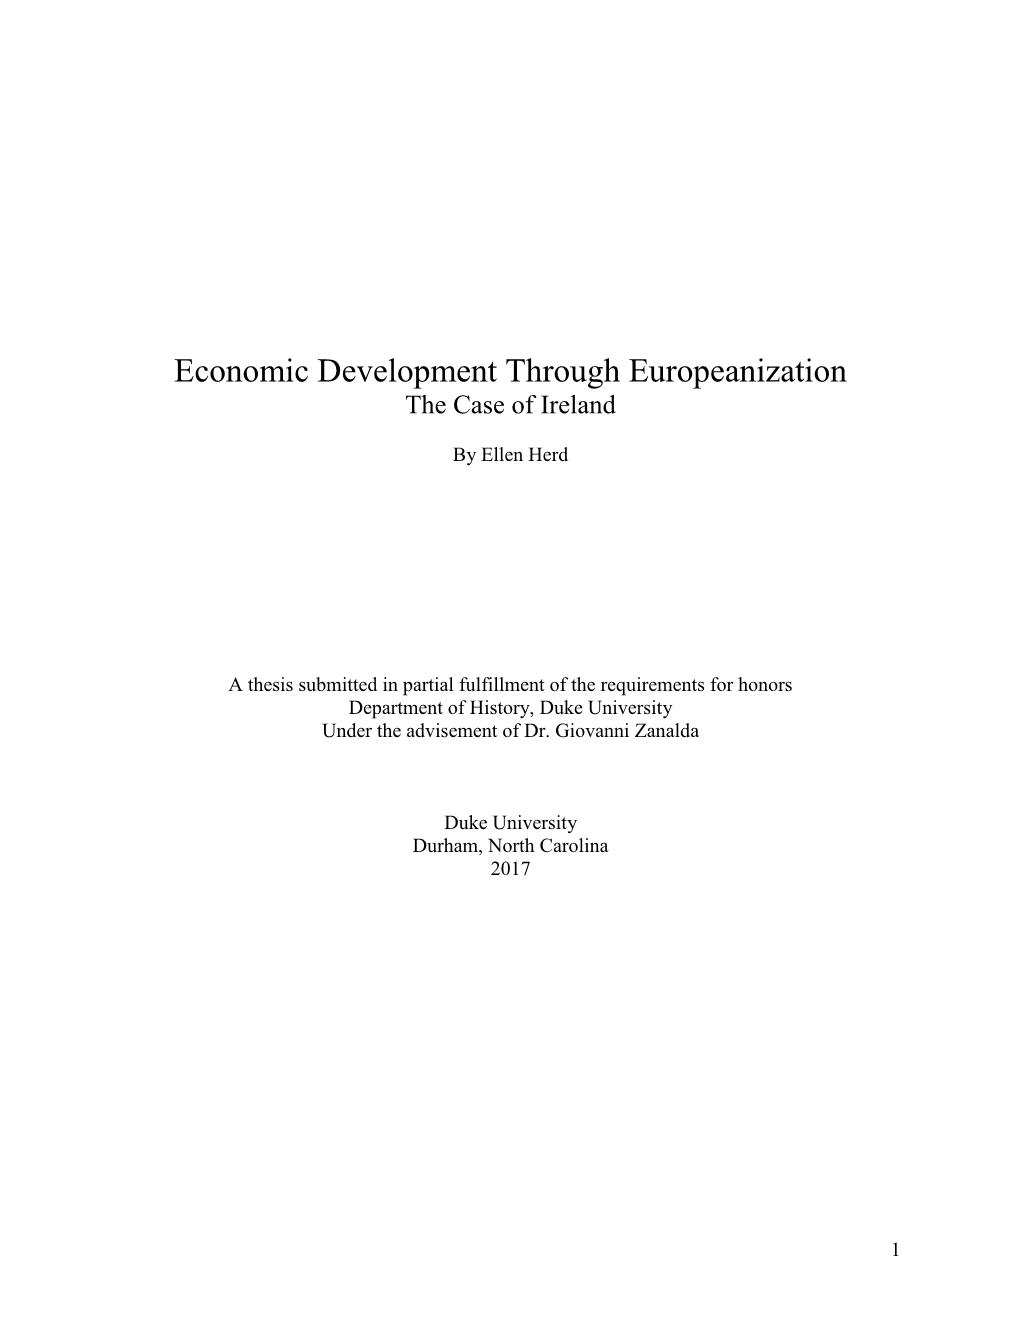 Economic Development Through Europeanization the Case of Ireland